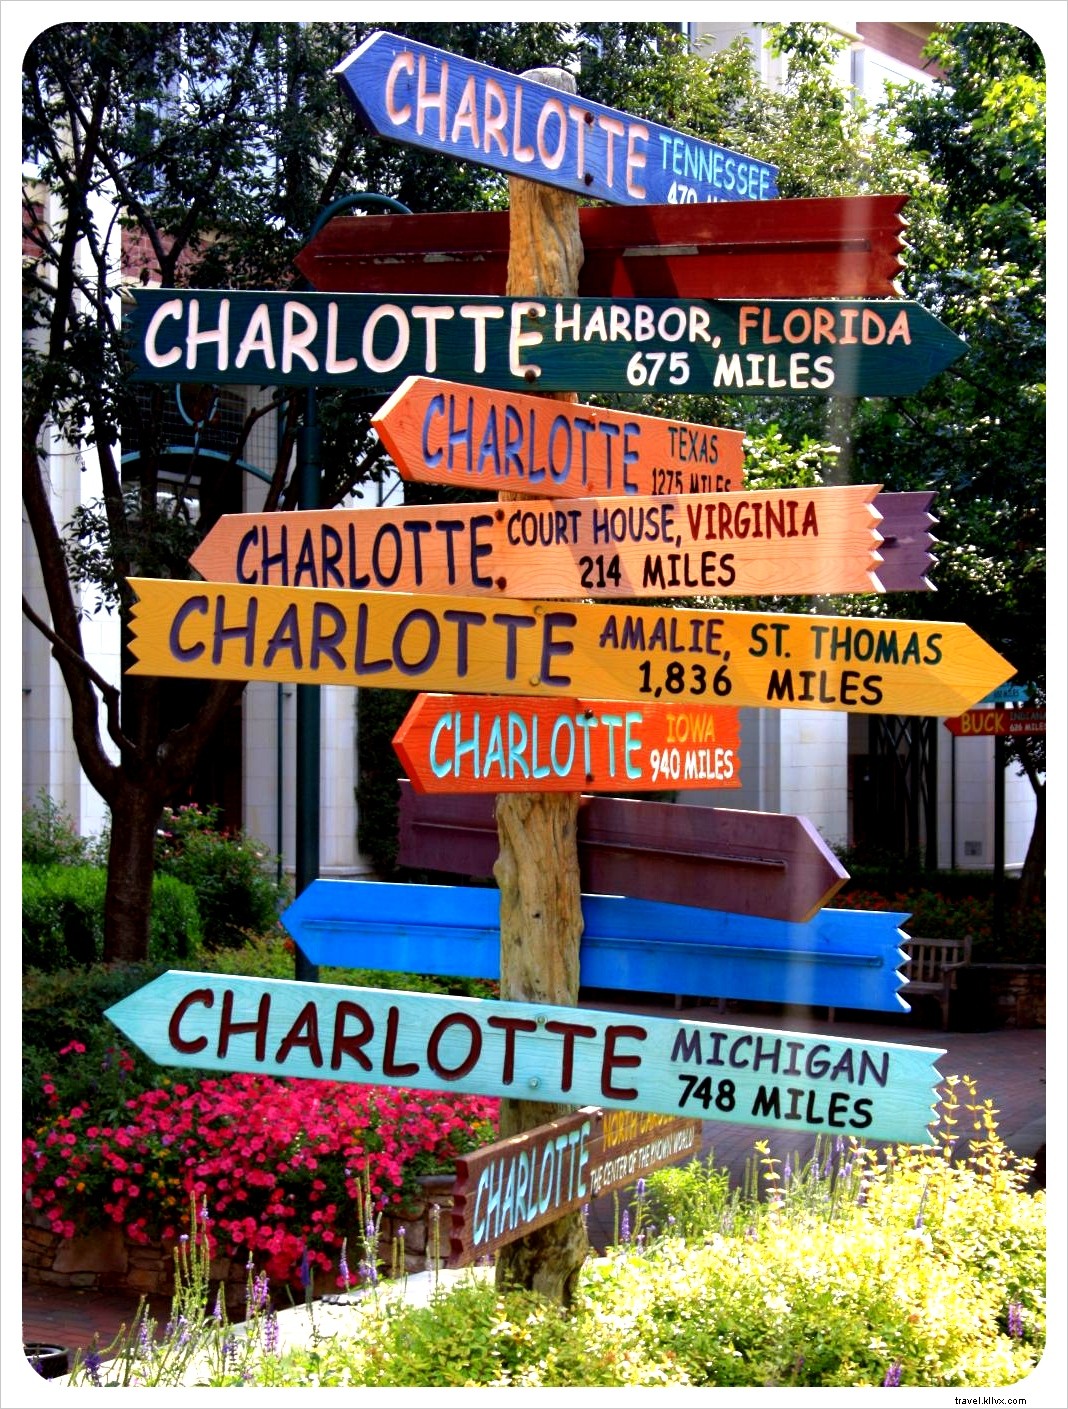 Gran viaje por carretera estadounidense:las Carolinas:de Charlotte a Charleston